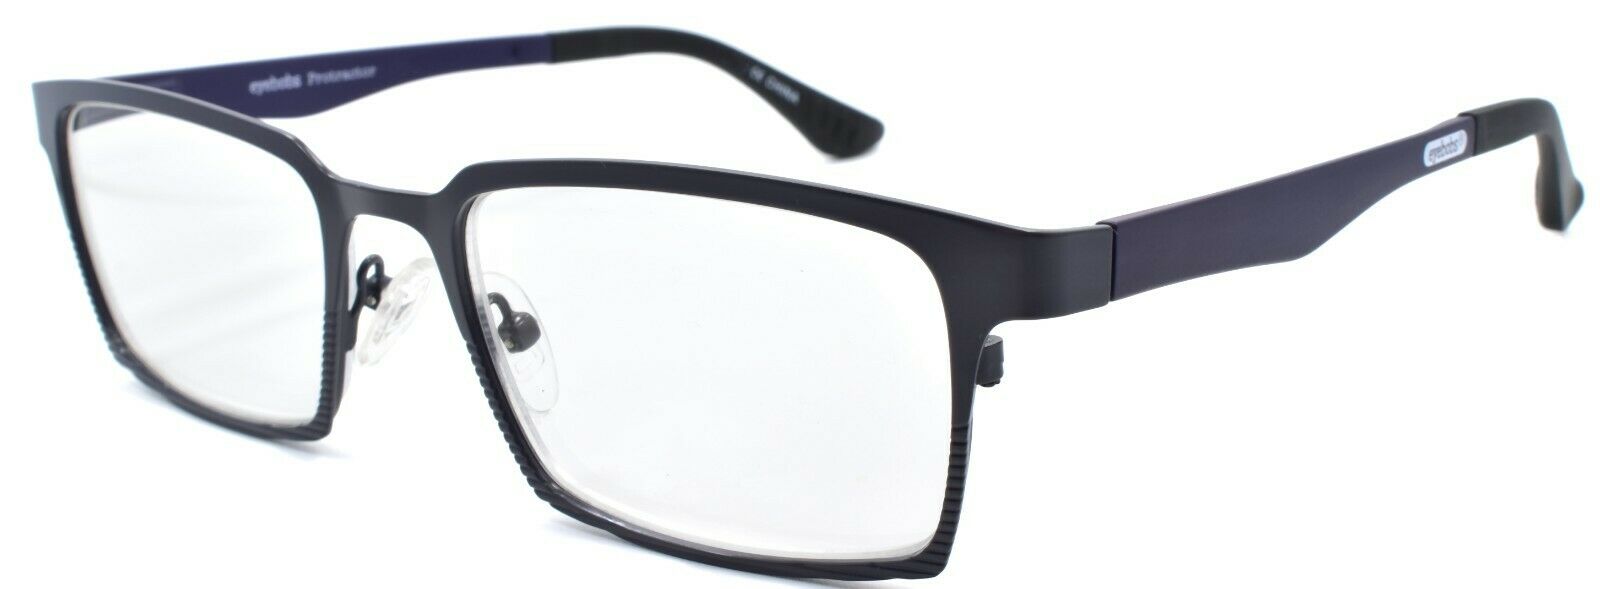 1-Eyebobs Protractor 905 02 Reading Glasses Gunmetal / Blue +2.50-842446045098-IKSpecs